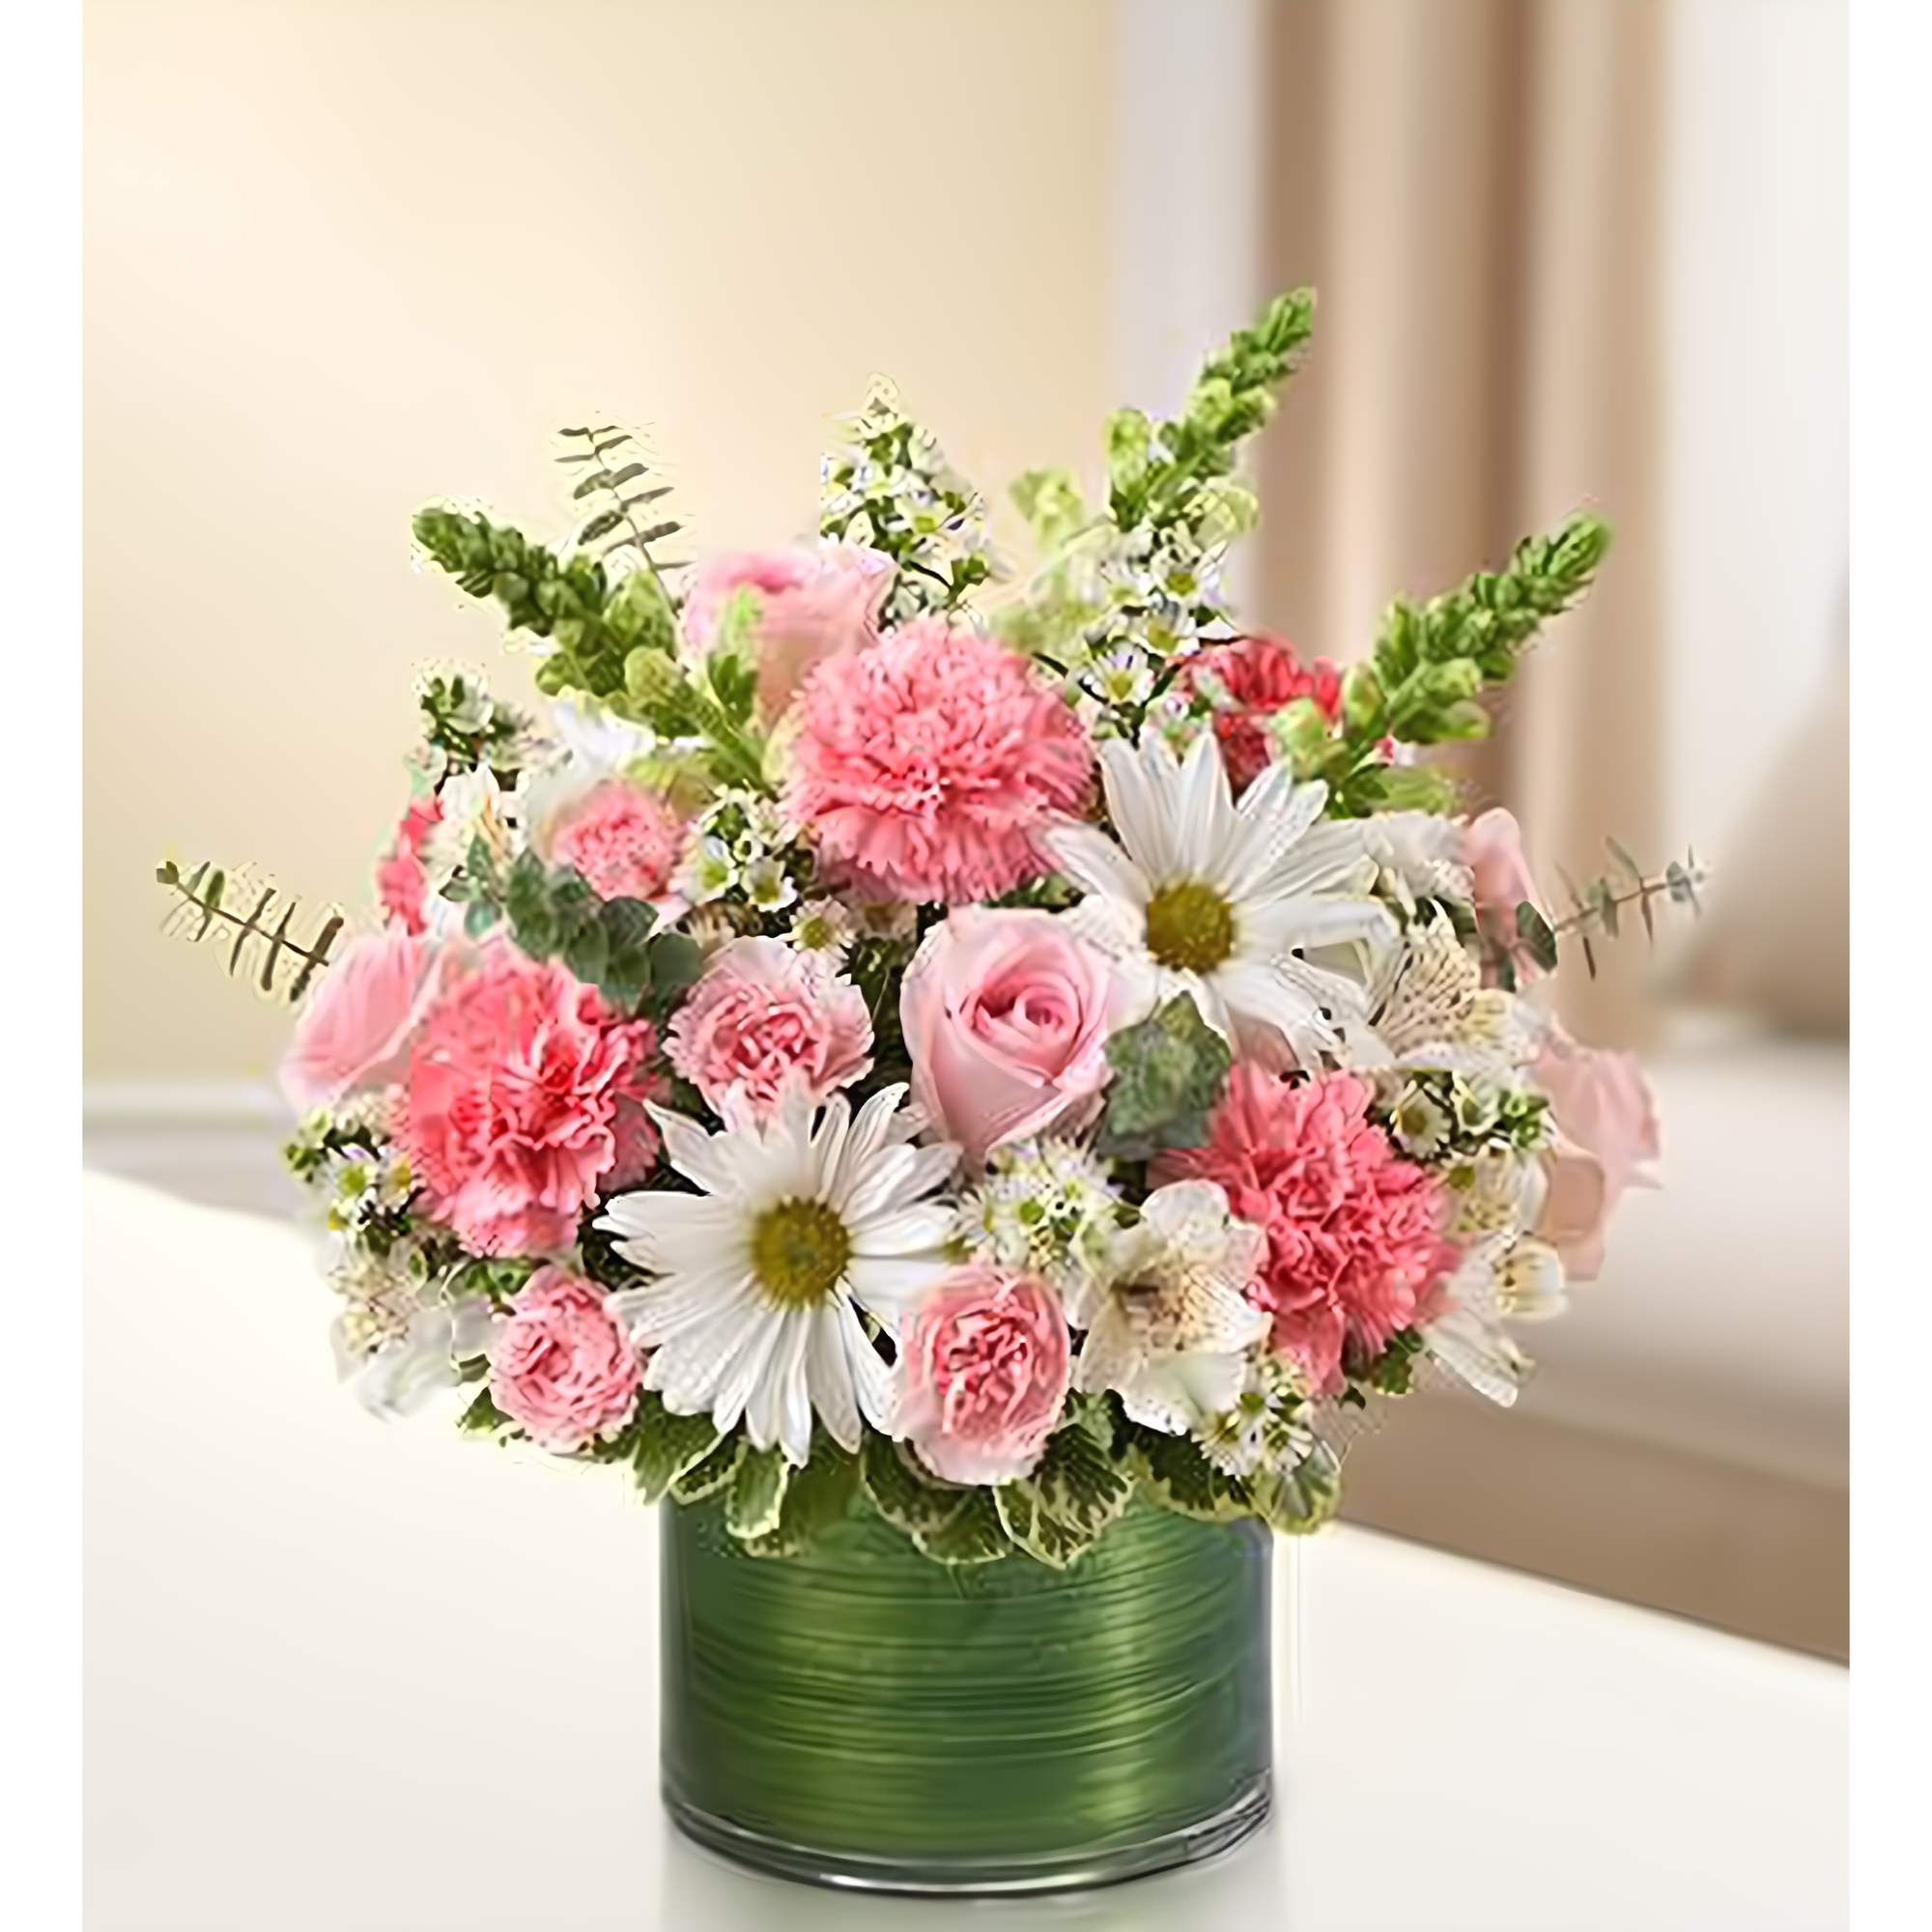 Manhattan Flower Delivery - Cherished Memories - Pink and White - Funeral > Vase Arrangements